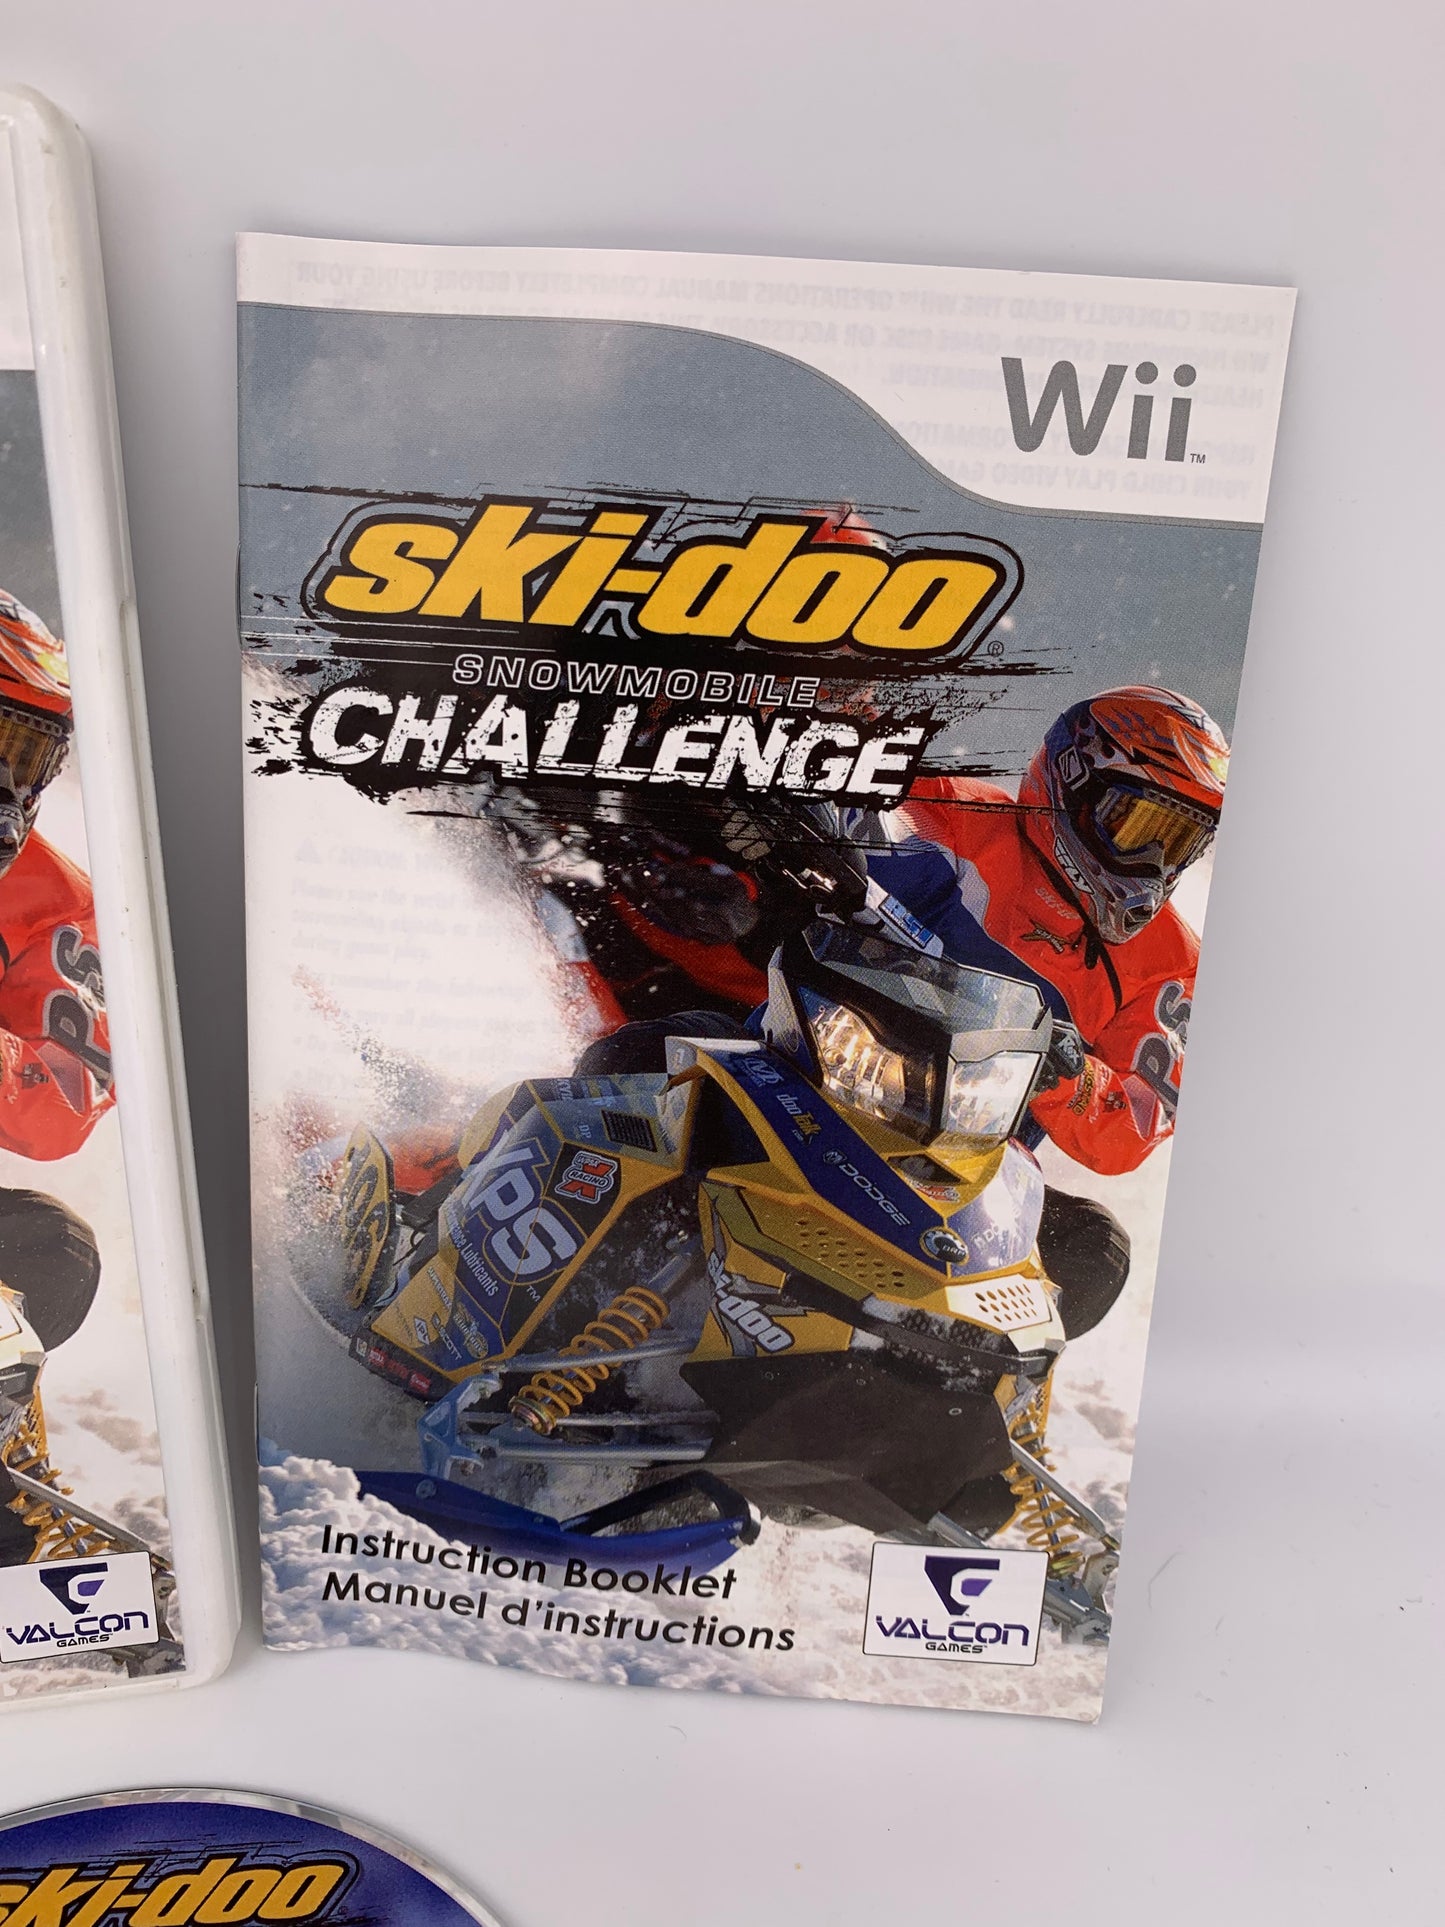 NiNTENDO Wii | SKi-DOO SNOWMOBiLE CHALLENGE